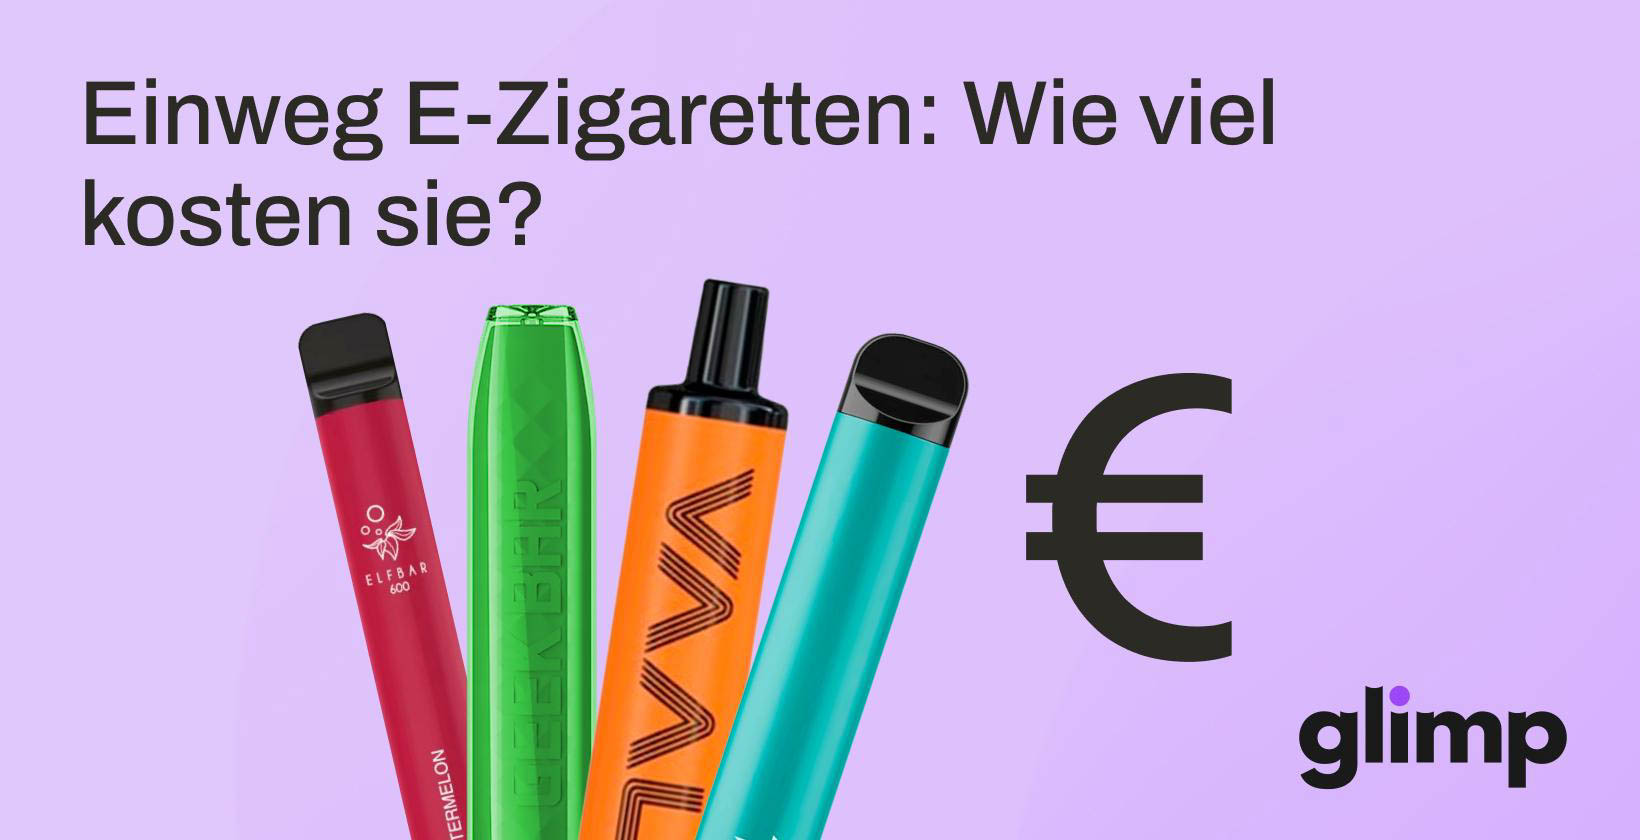 https://glimp.de/wp-content/uploads/e-zigarette/einweg-e-zigarette/Einweg-E-Zigaretten_-Wie-viel-kosten-sie_.jpg